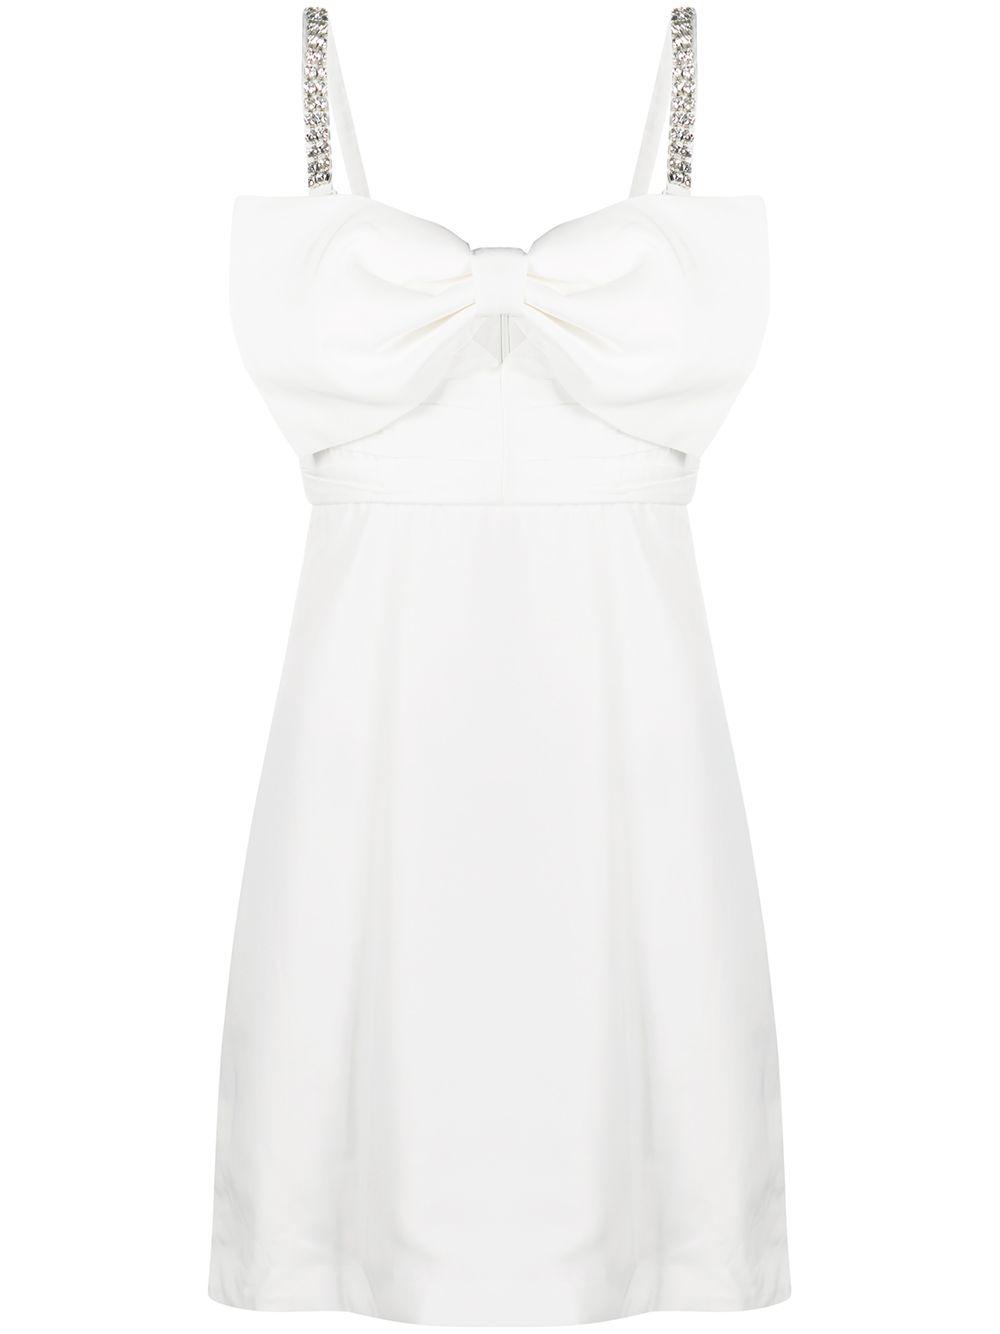 Self-Portrait Taffeta Bow Mini Dress in White - Lyst